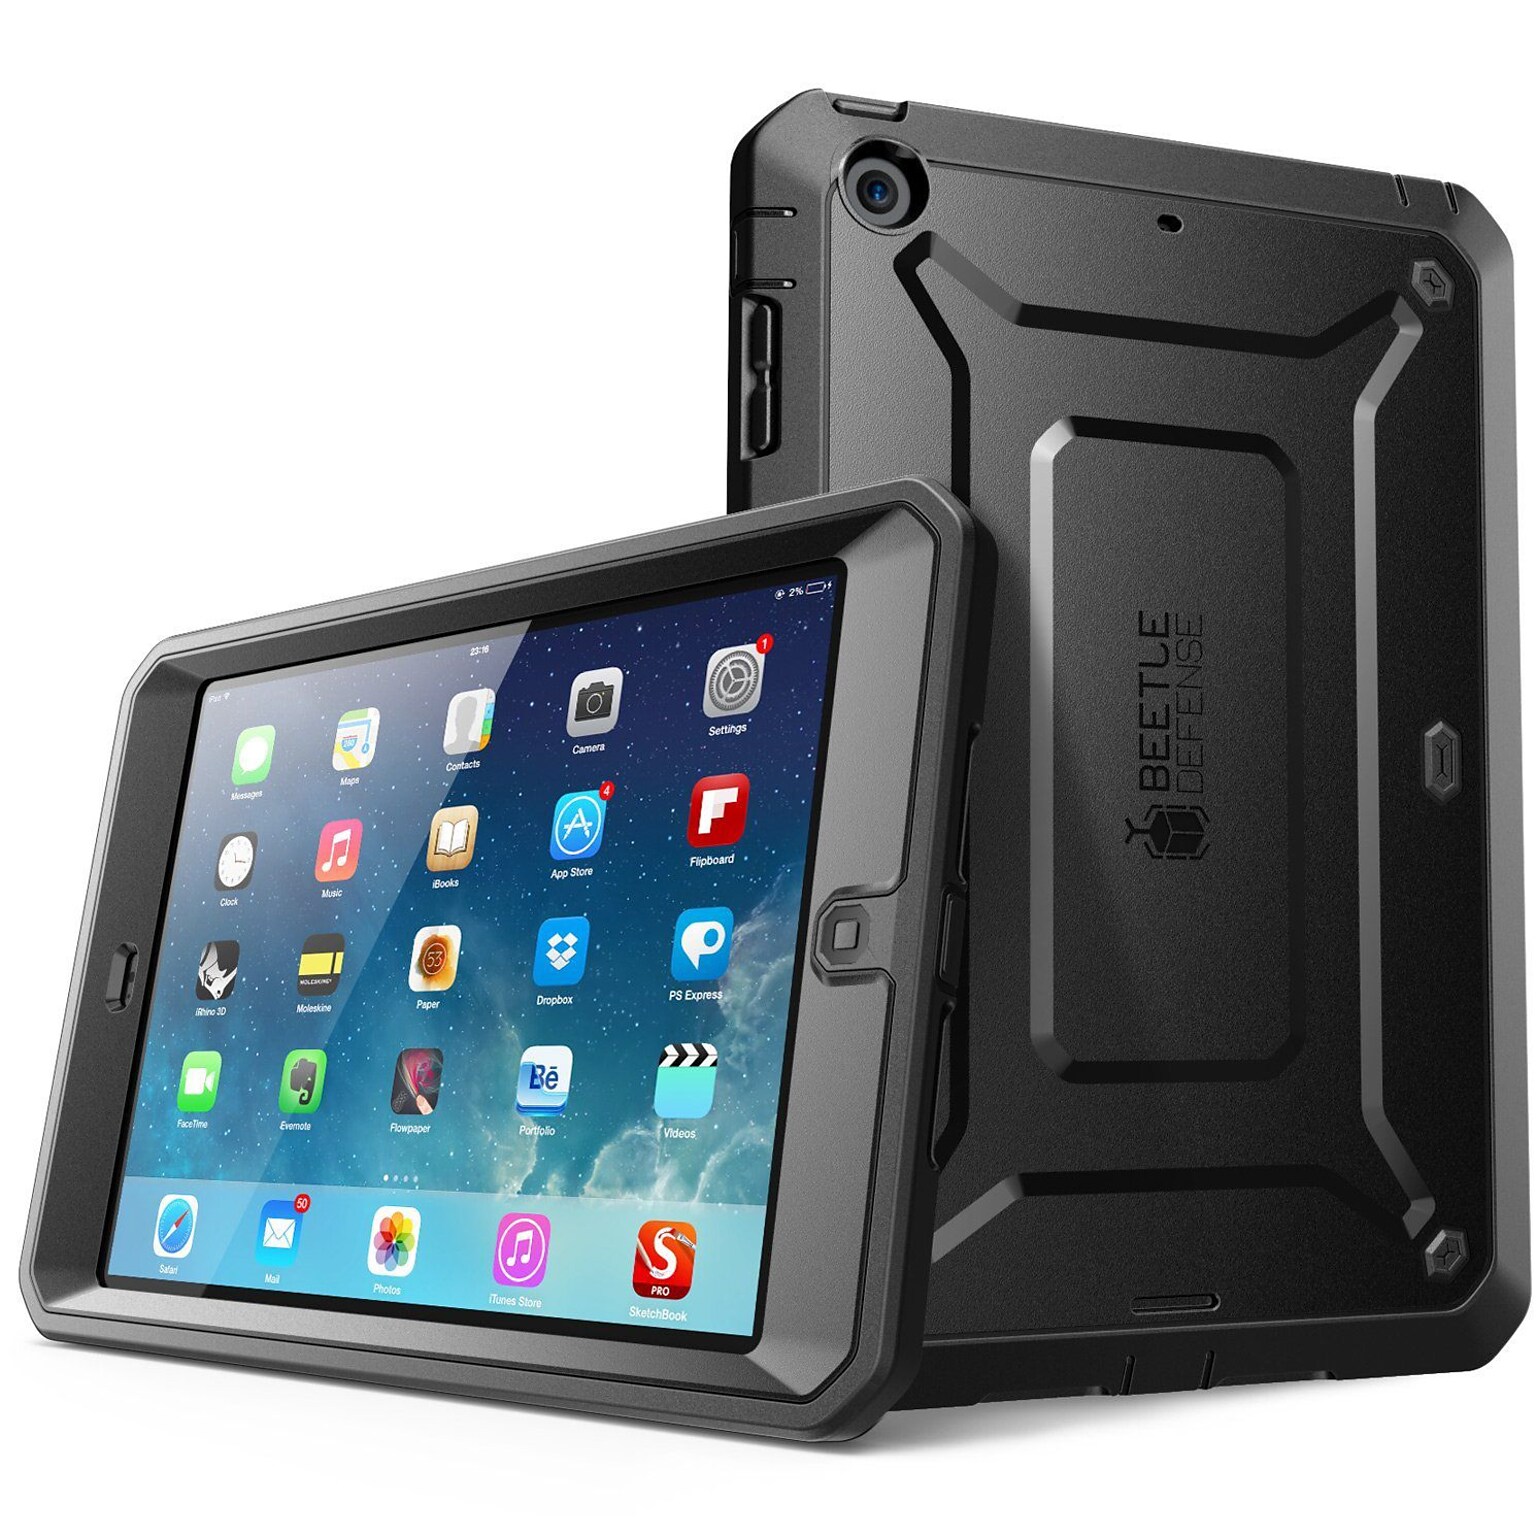 SUPCASE Beetle Defense Series Full body Hybrid Protective Case For Apple iPad Mini, Black/Black